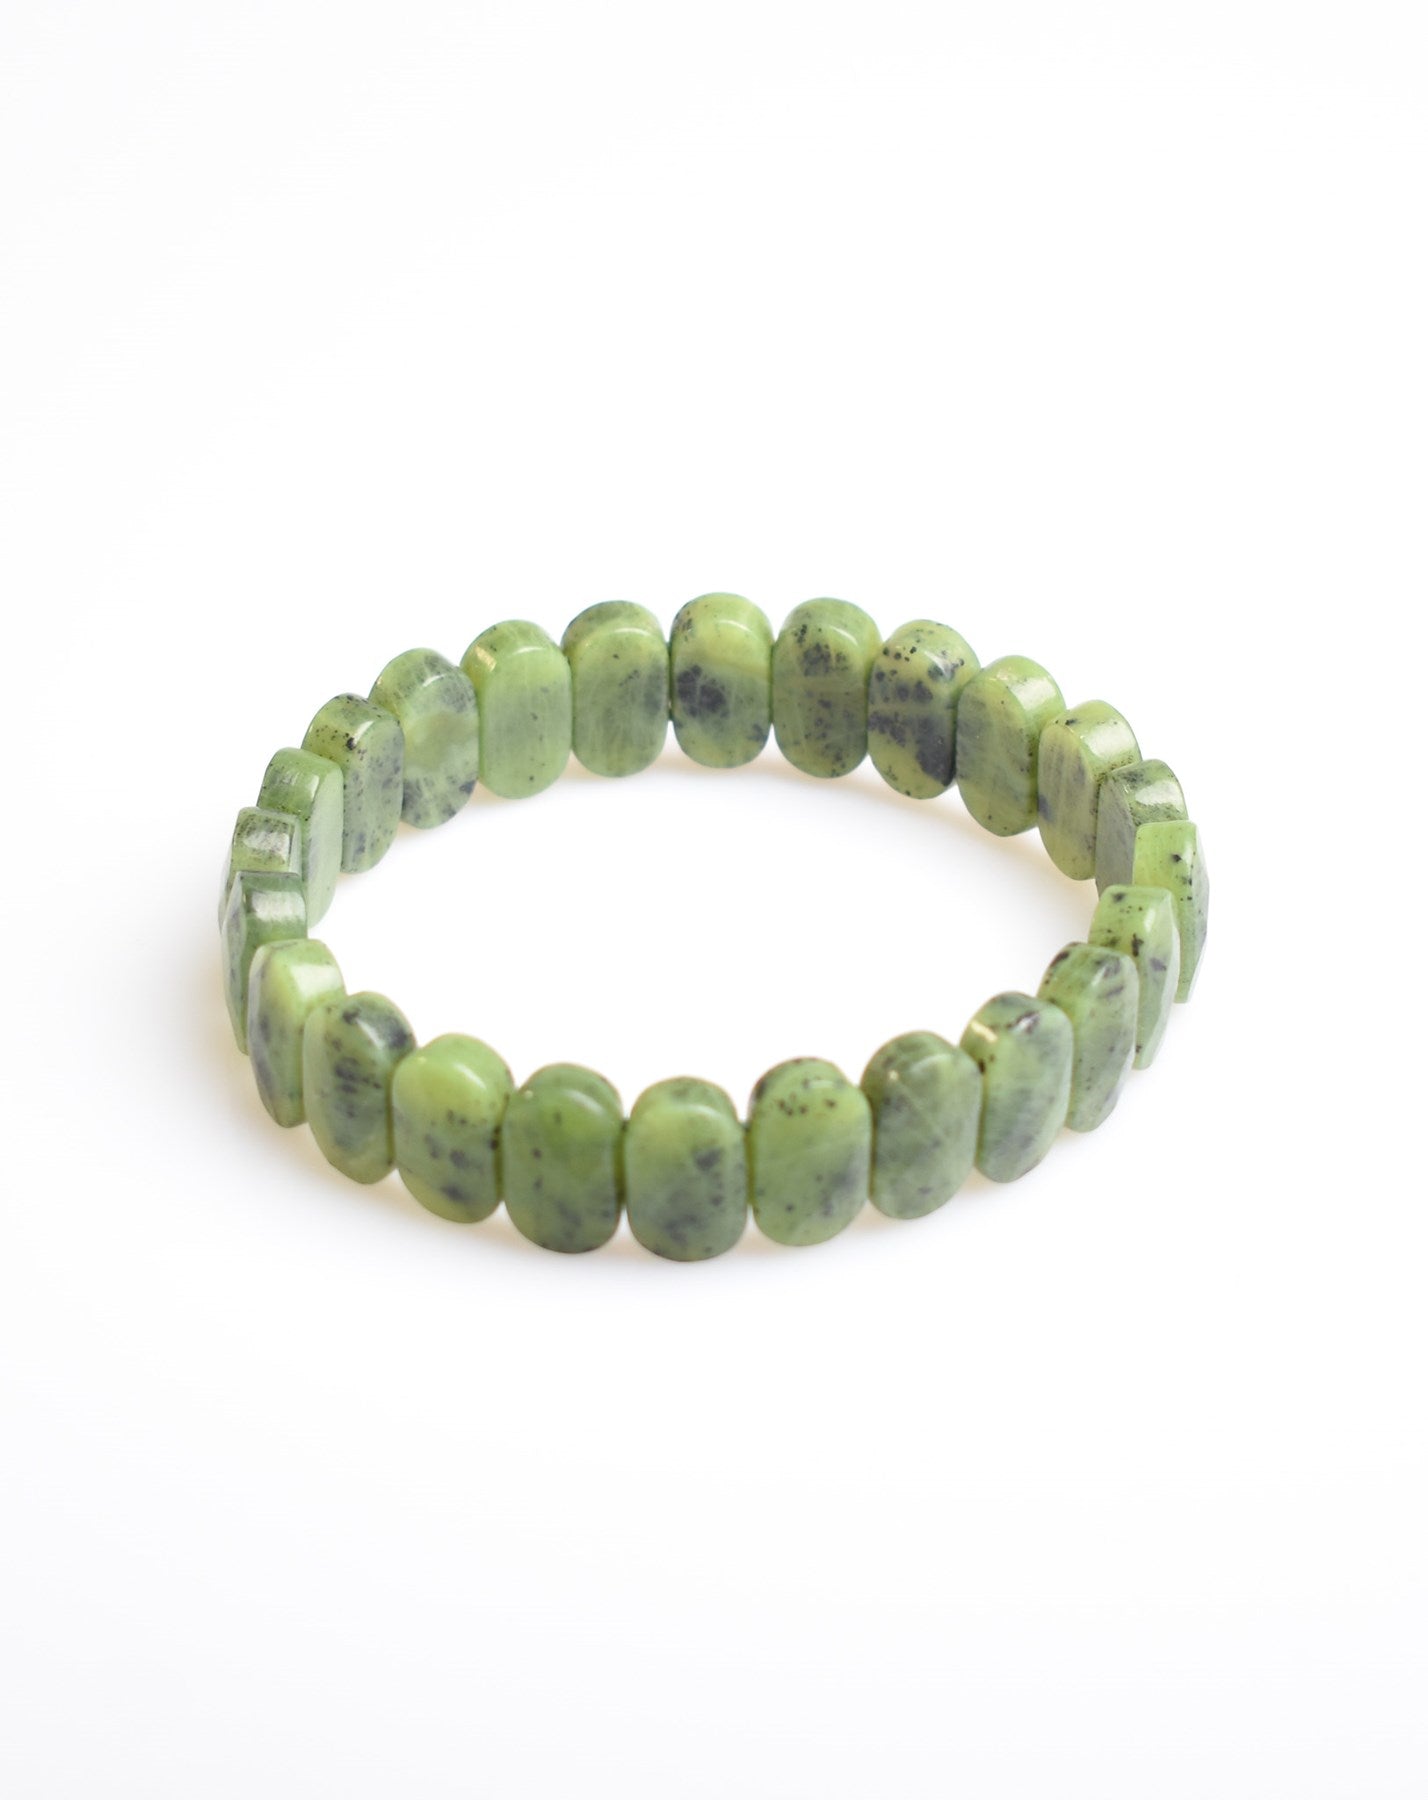 Jade Natural Gemstone Bracelet 9x14mm Rectangle Cut